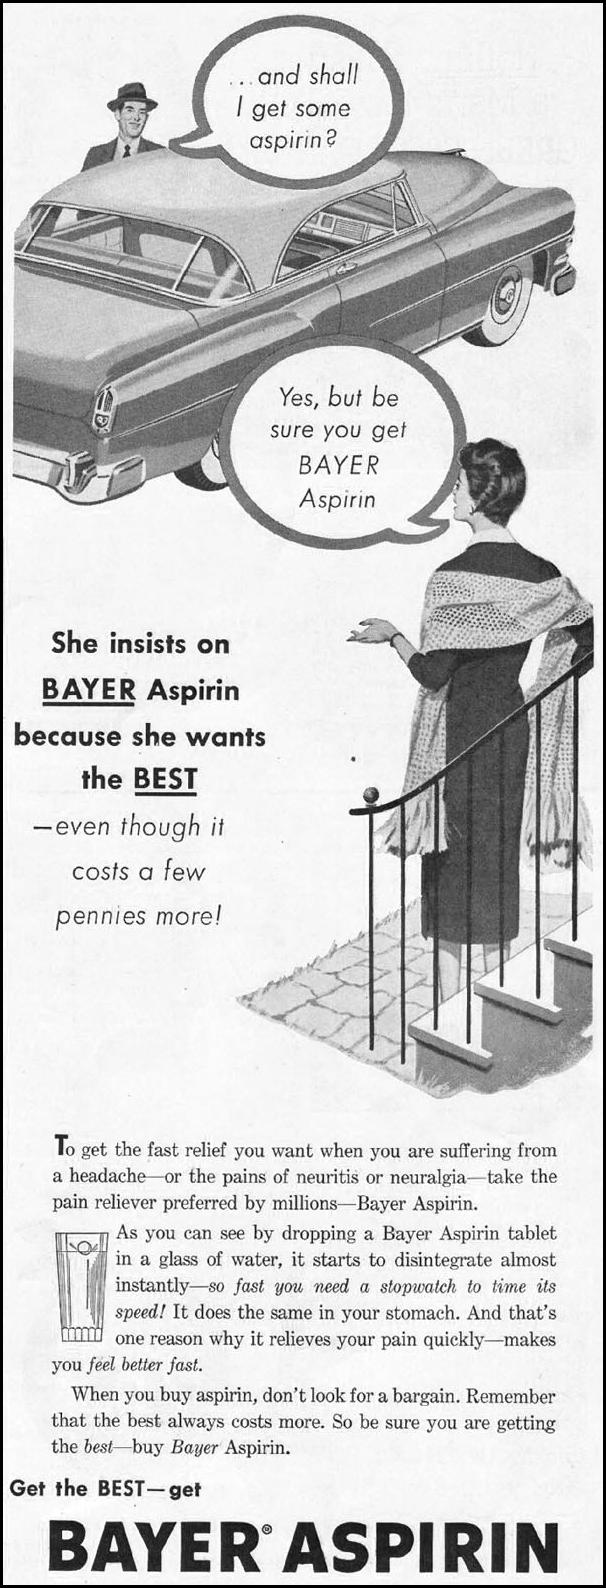 BAYER ASPIRIN
LADIES' HOME JOURNAL
06/01/1954
p. 133